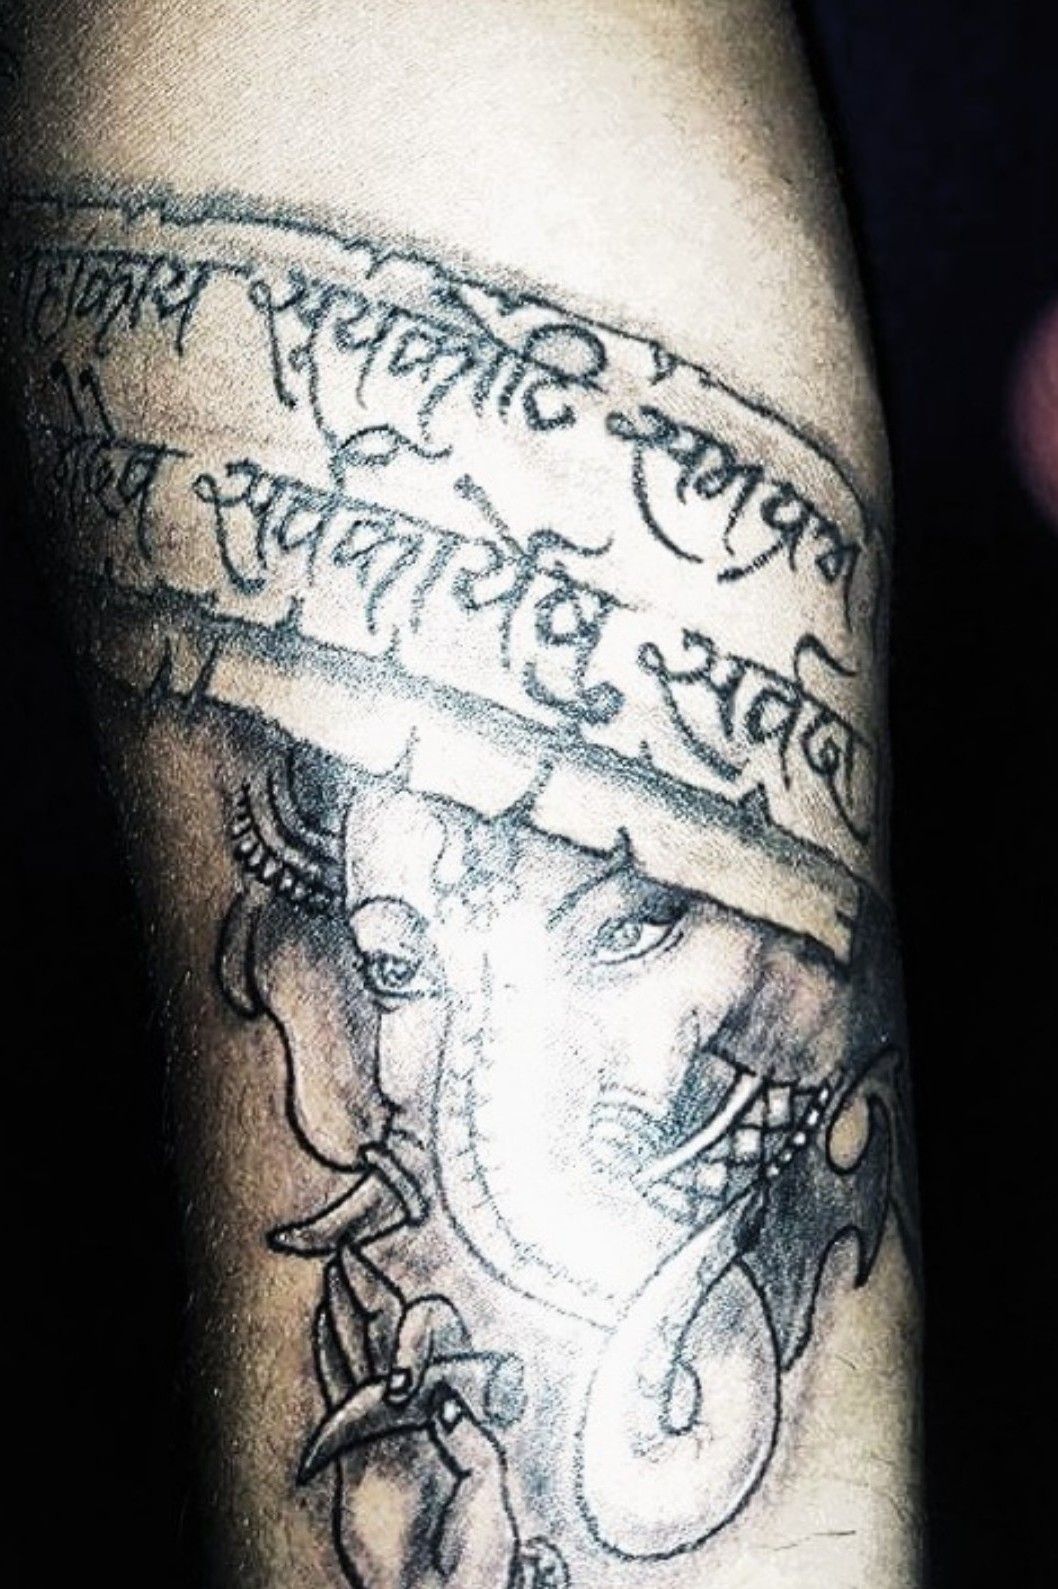 Mantra Tattoos